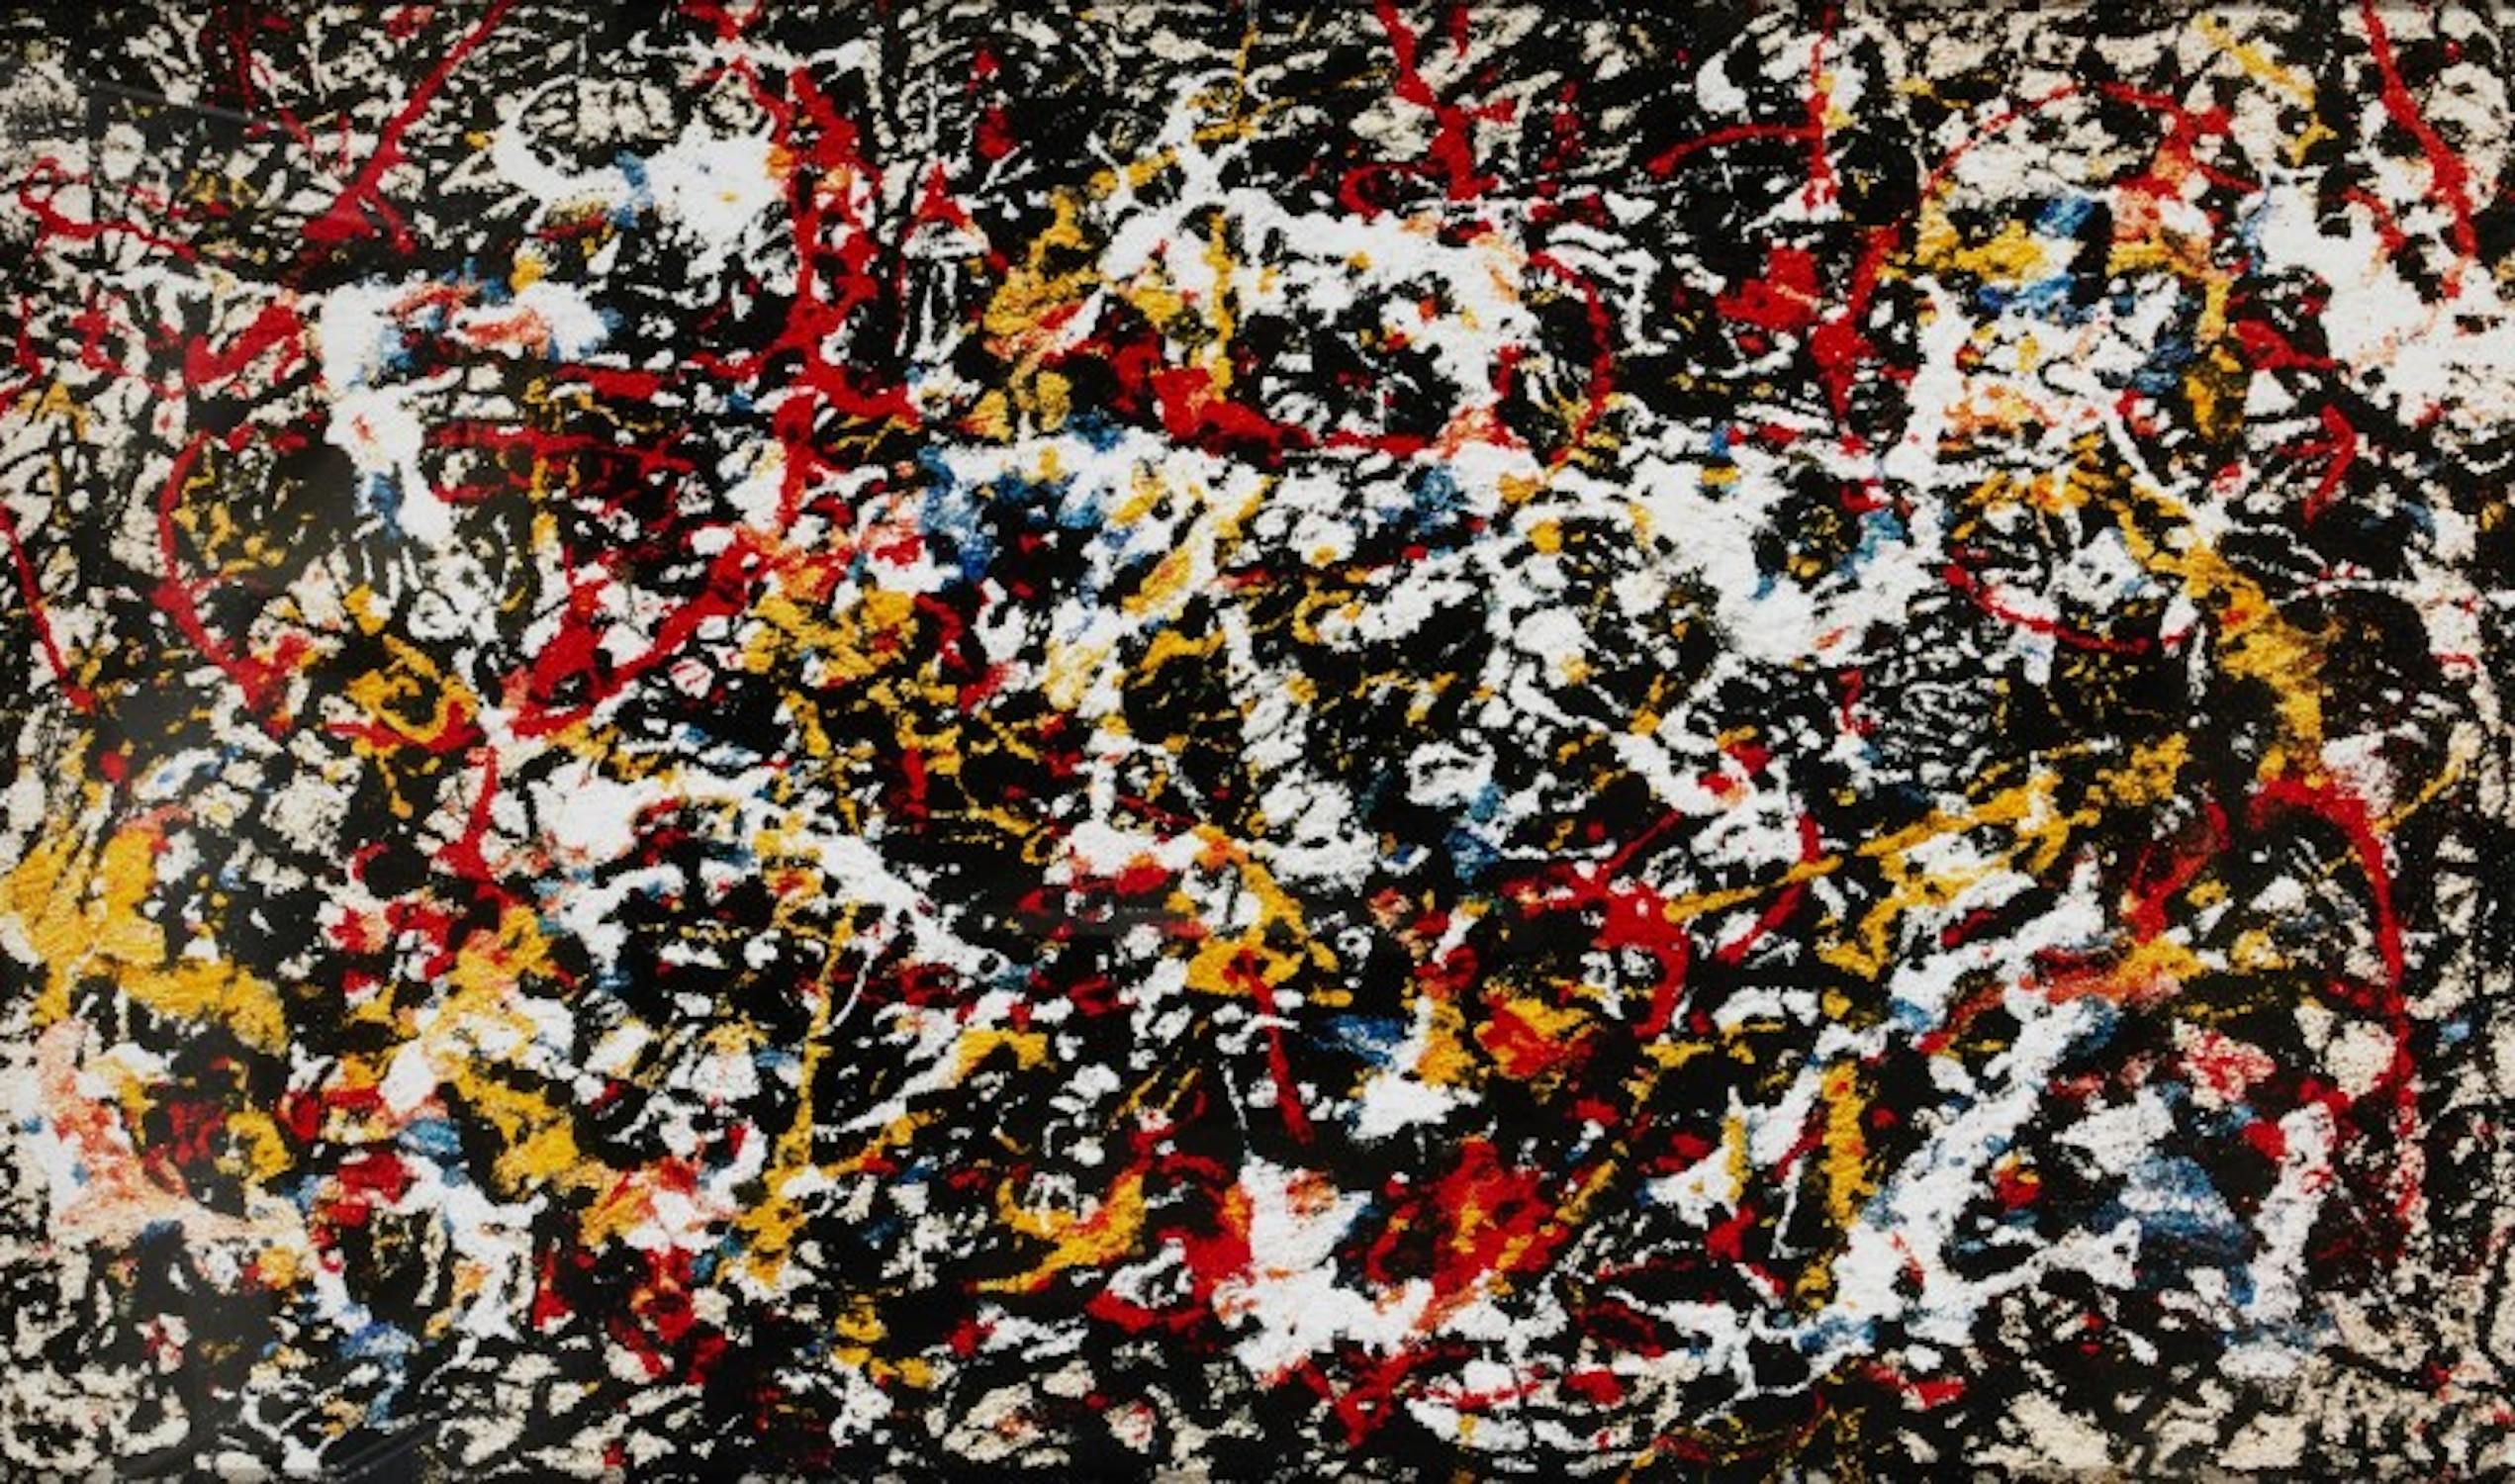 Convergence: No. 10 (After Jackson Pollock) (AP 1/4) - Print by Vik Muniz